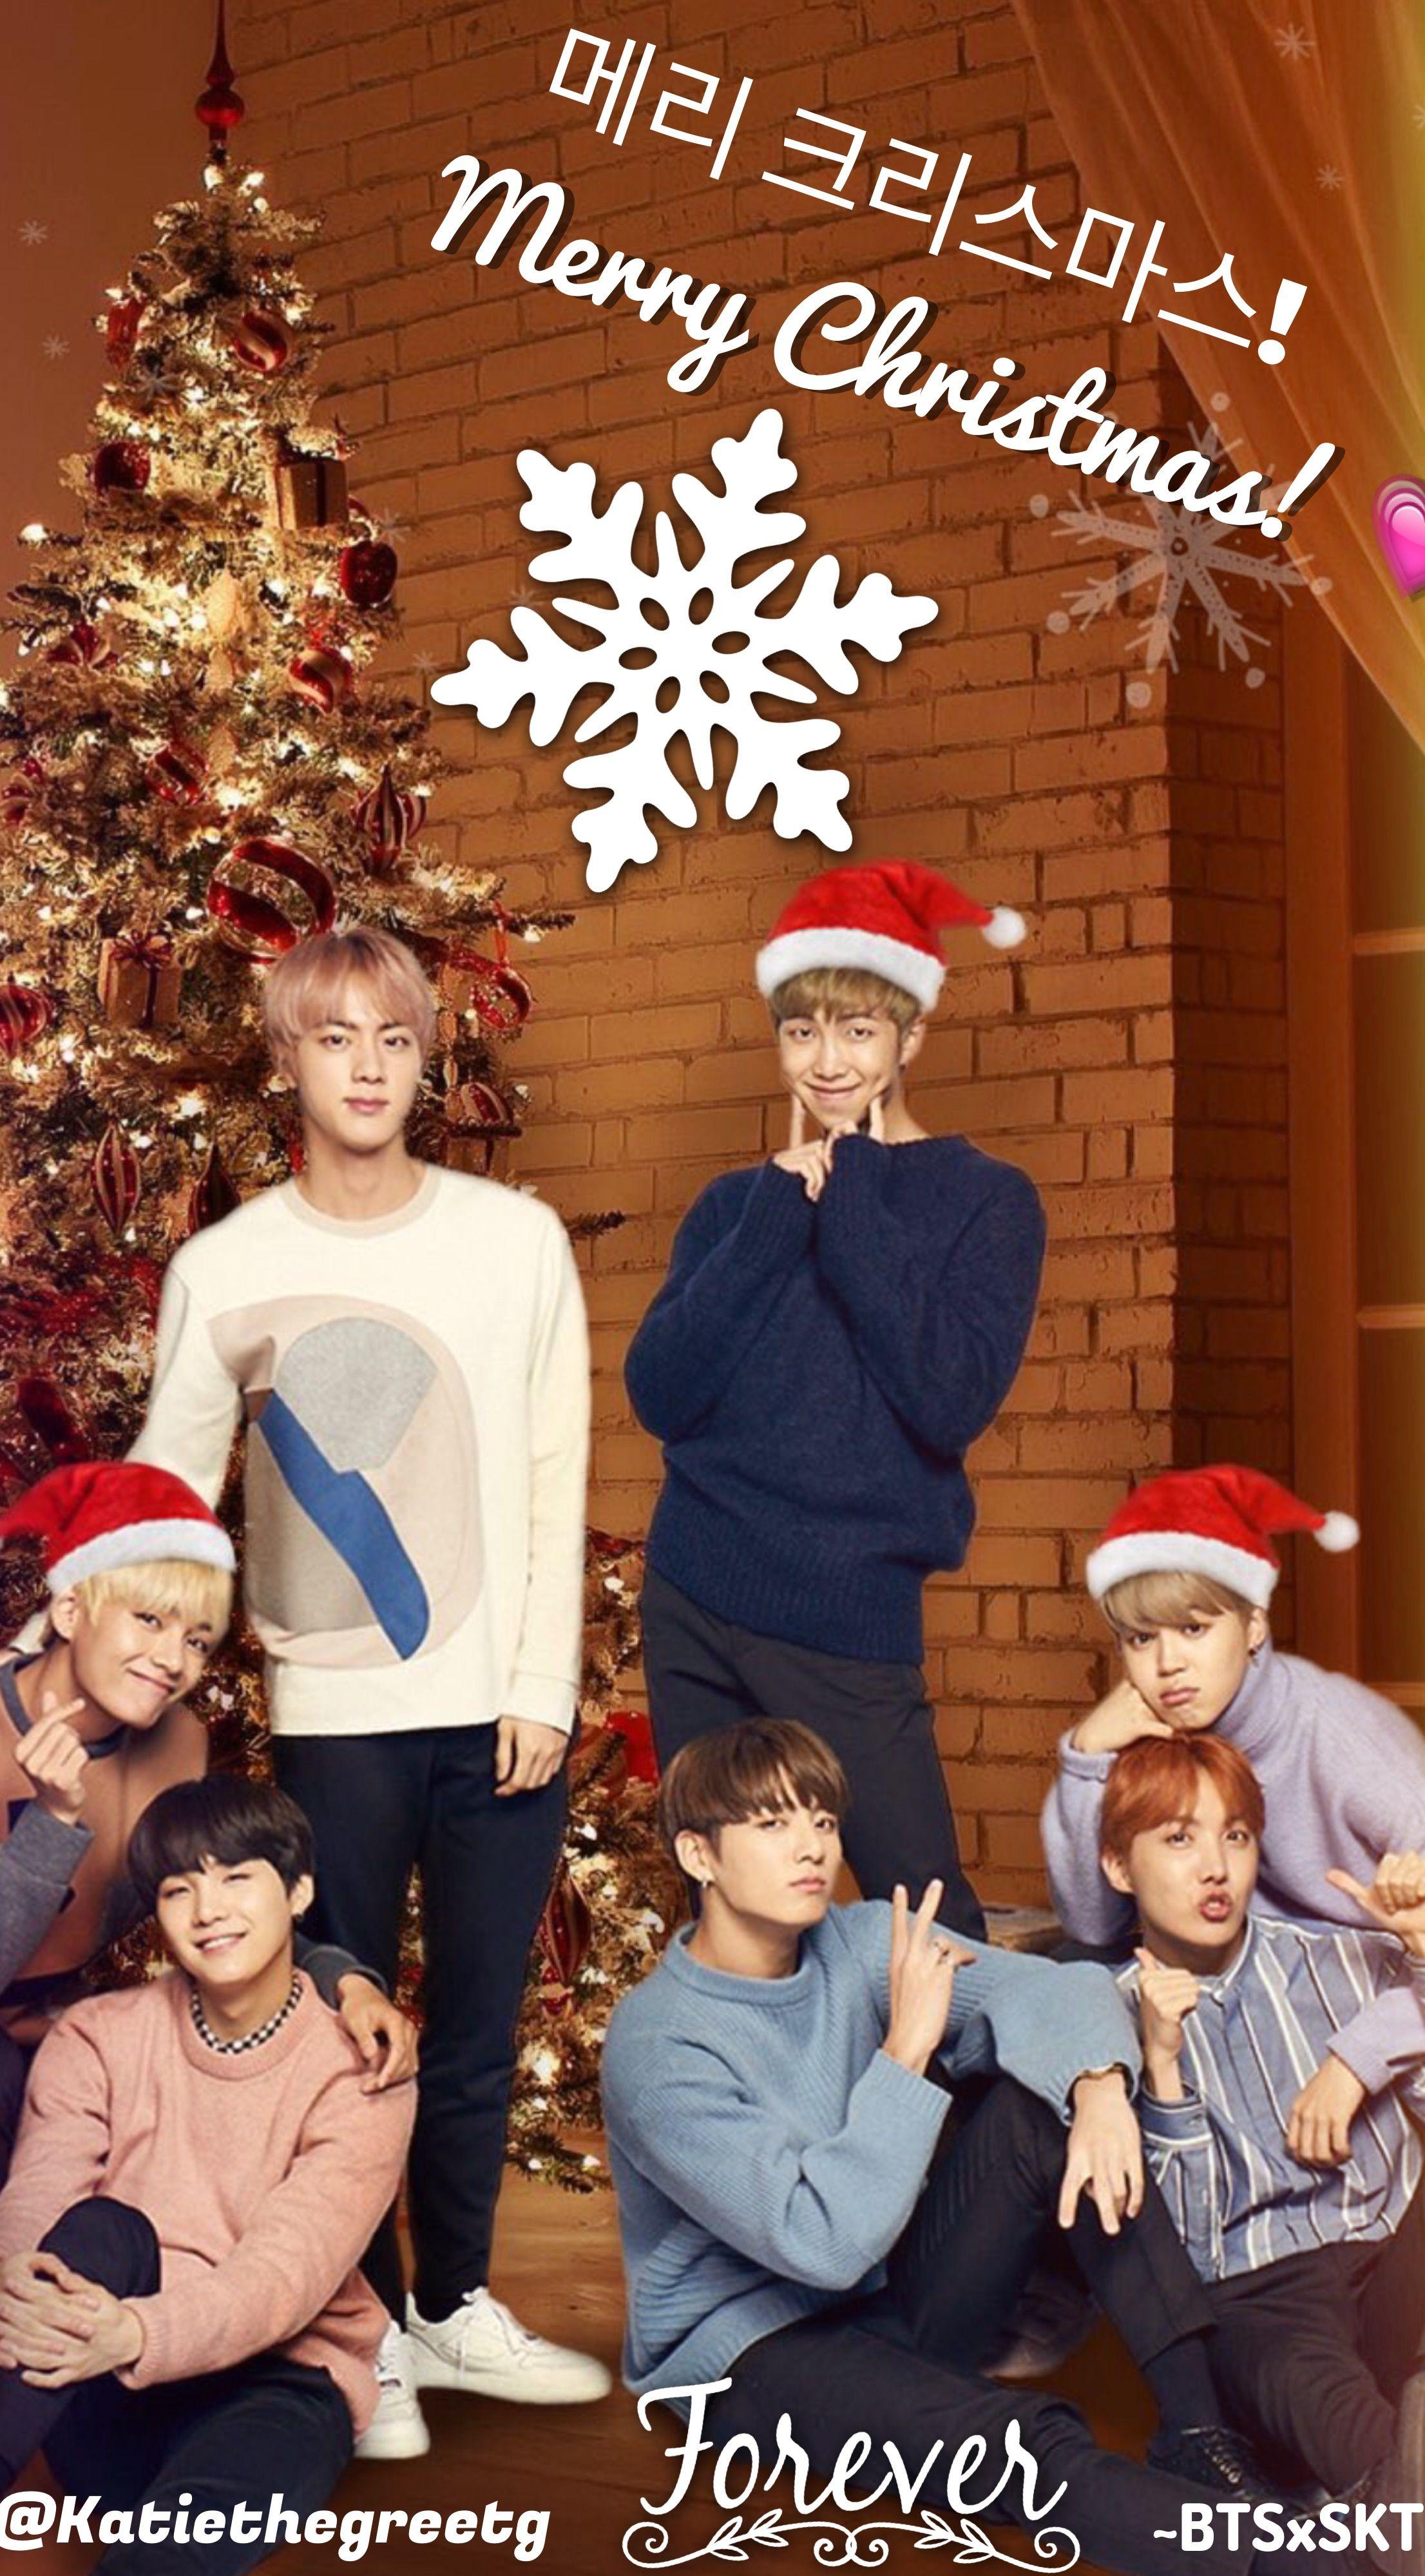 BTS wallpaper Christmas Bangtan boys 방탄소년단. Wallpaper